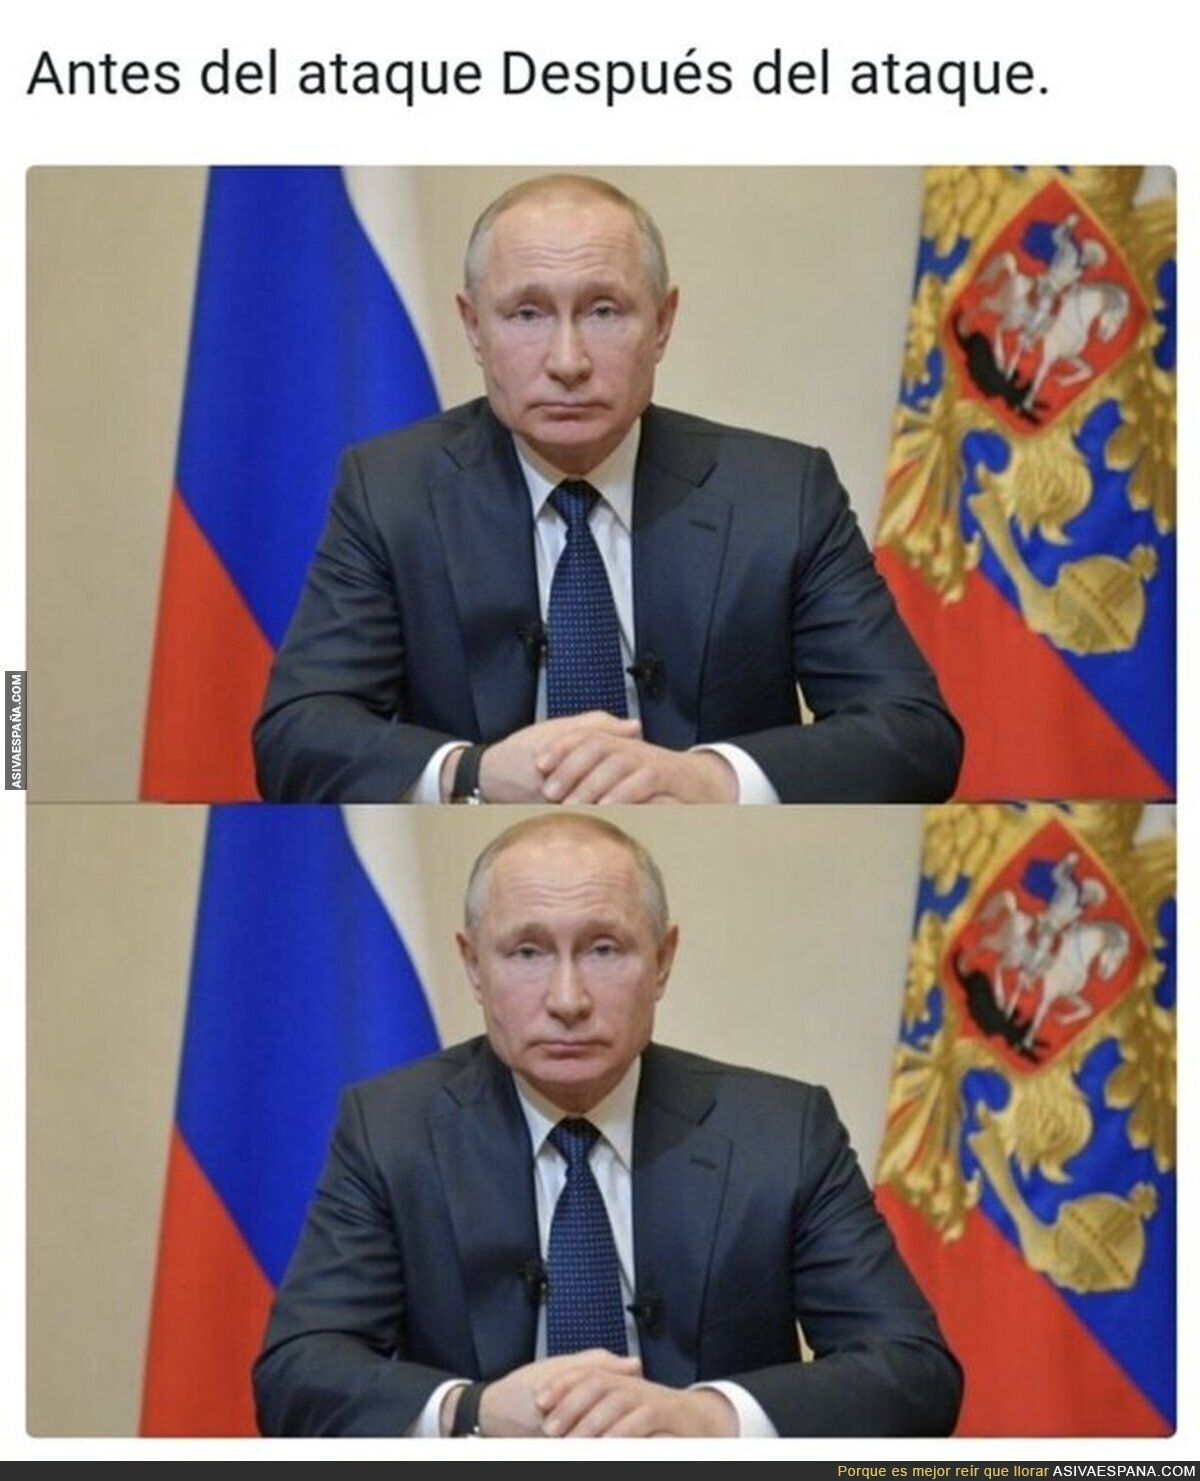 Vladimir Putin no tiene sentimientos